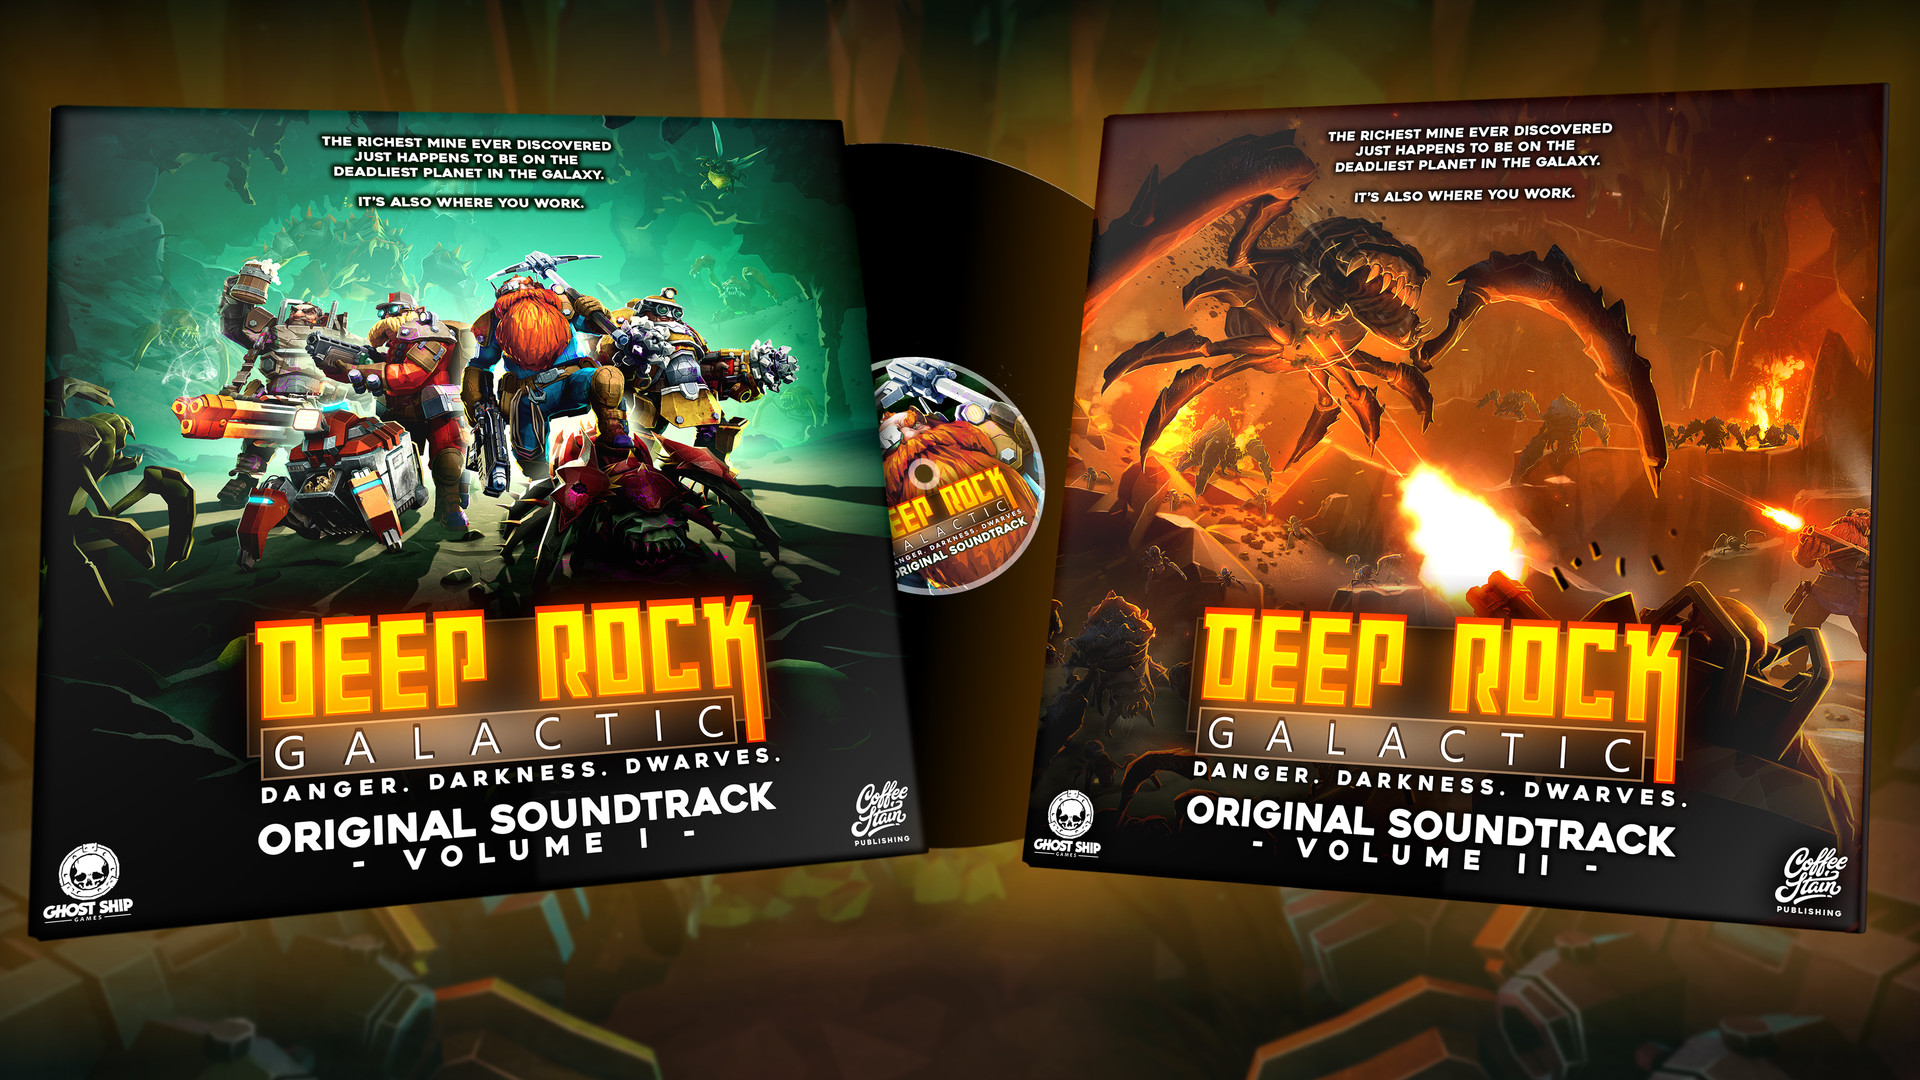 Deep Rock Galactic - Original Soundtrack Volume I + II Featured Screenshot #1